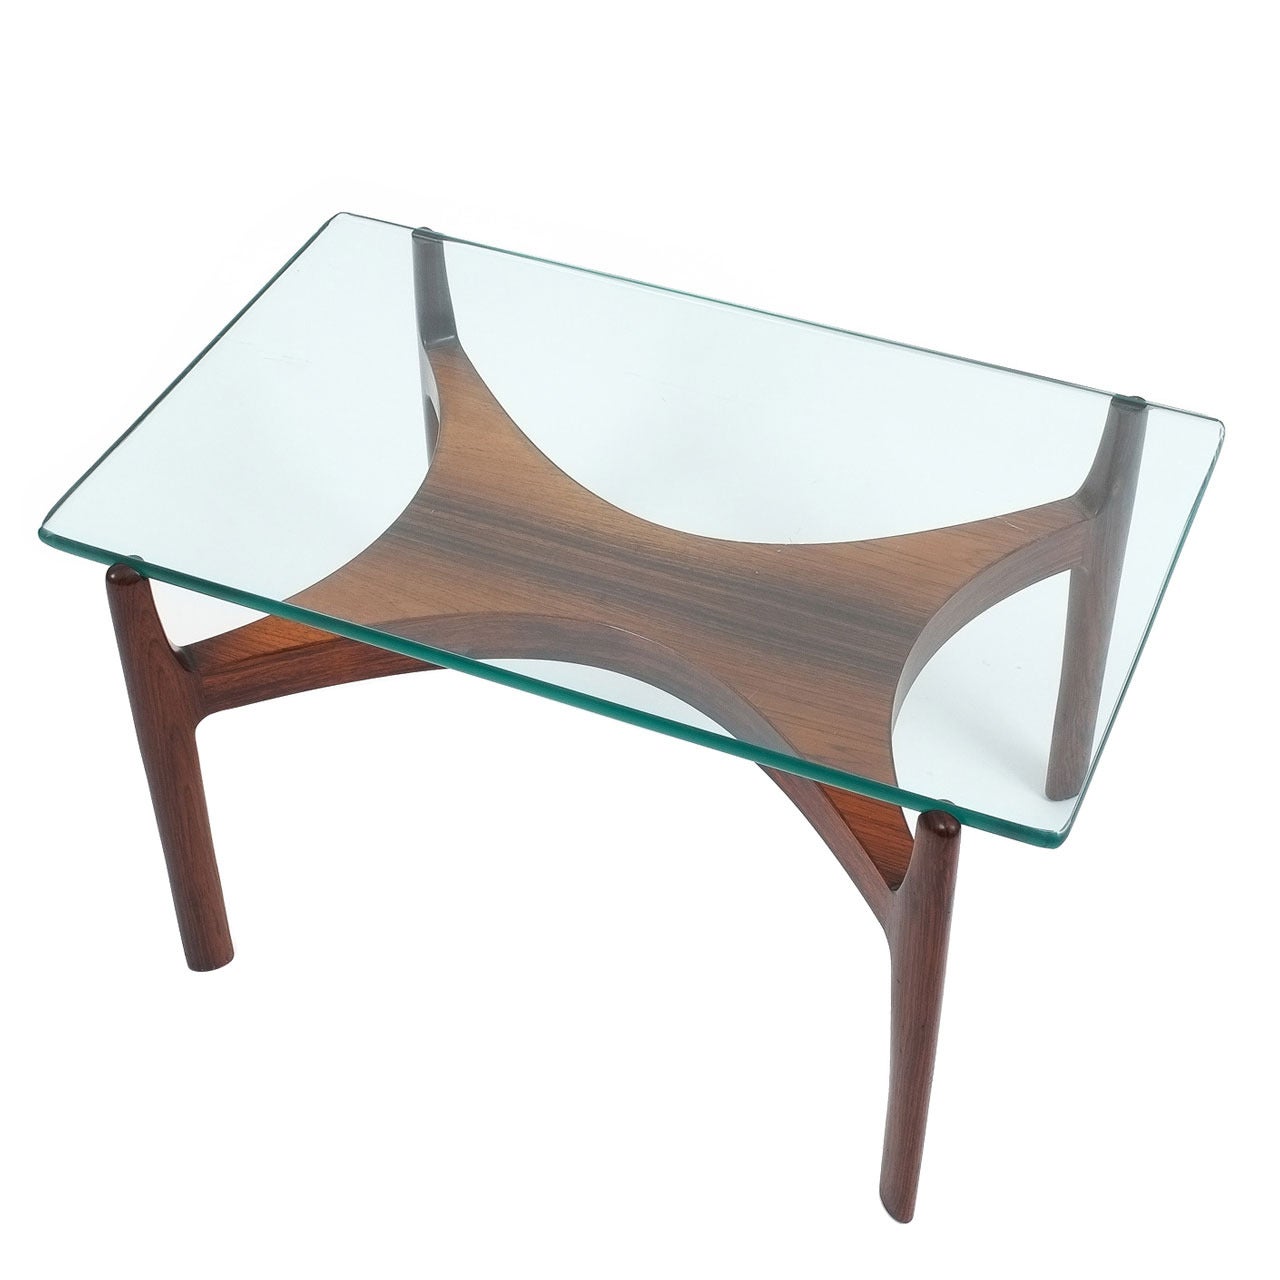 Sven Ellekaer Petite Coffee or Side Table Teak Wood and Glass, Denmark, 1960